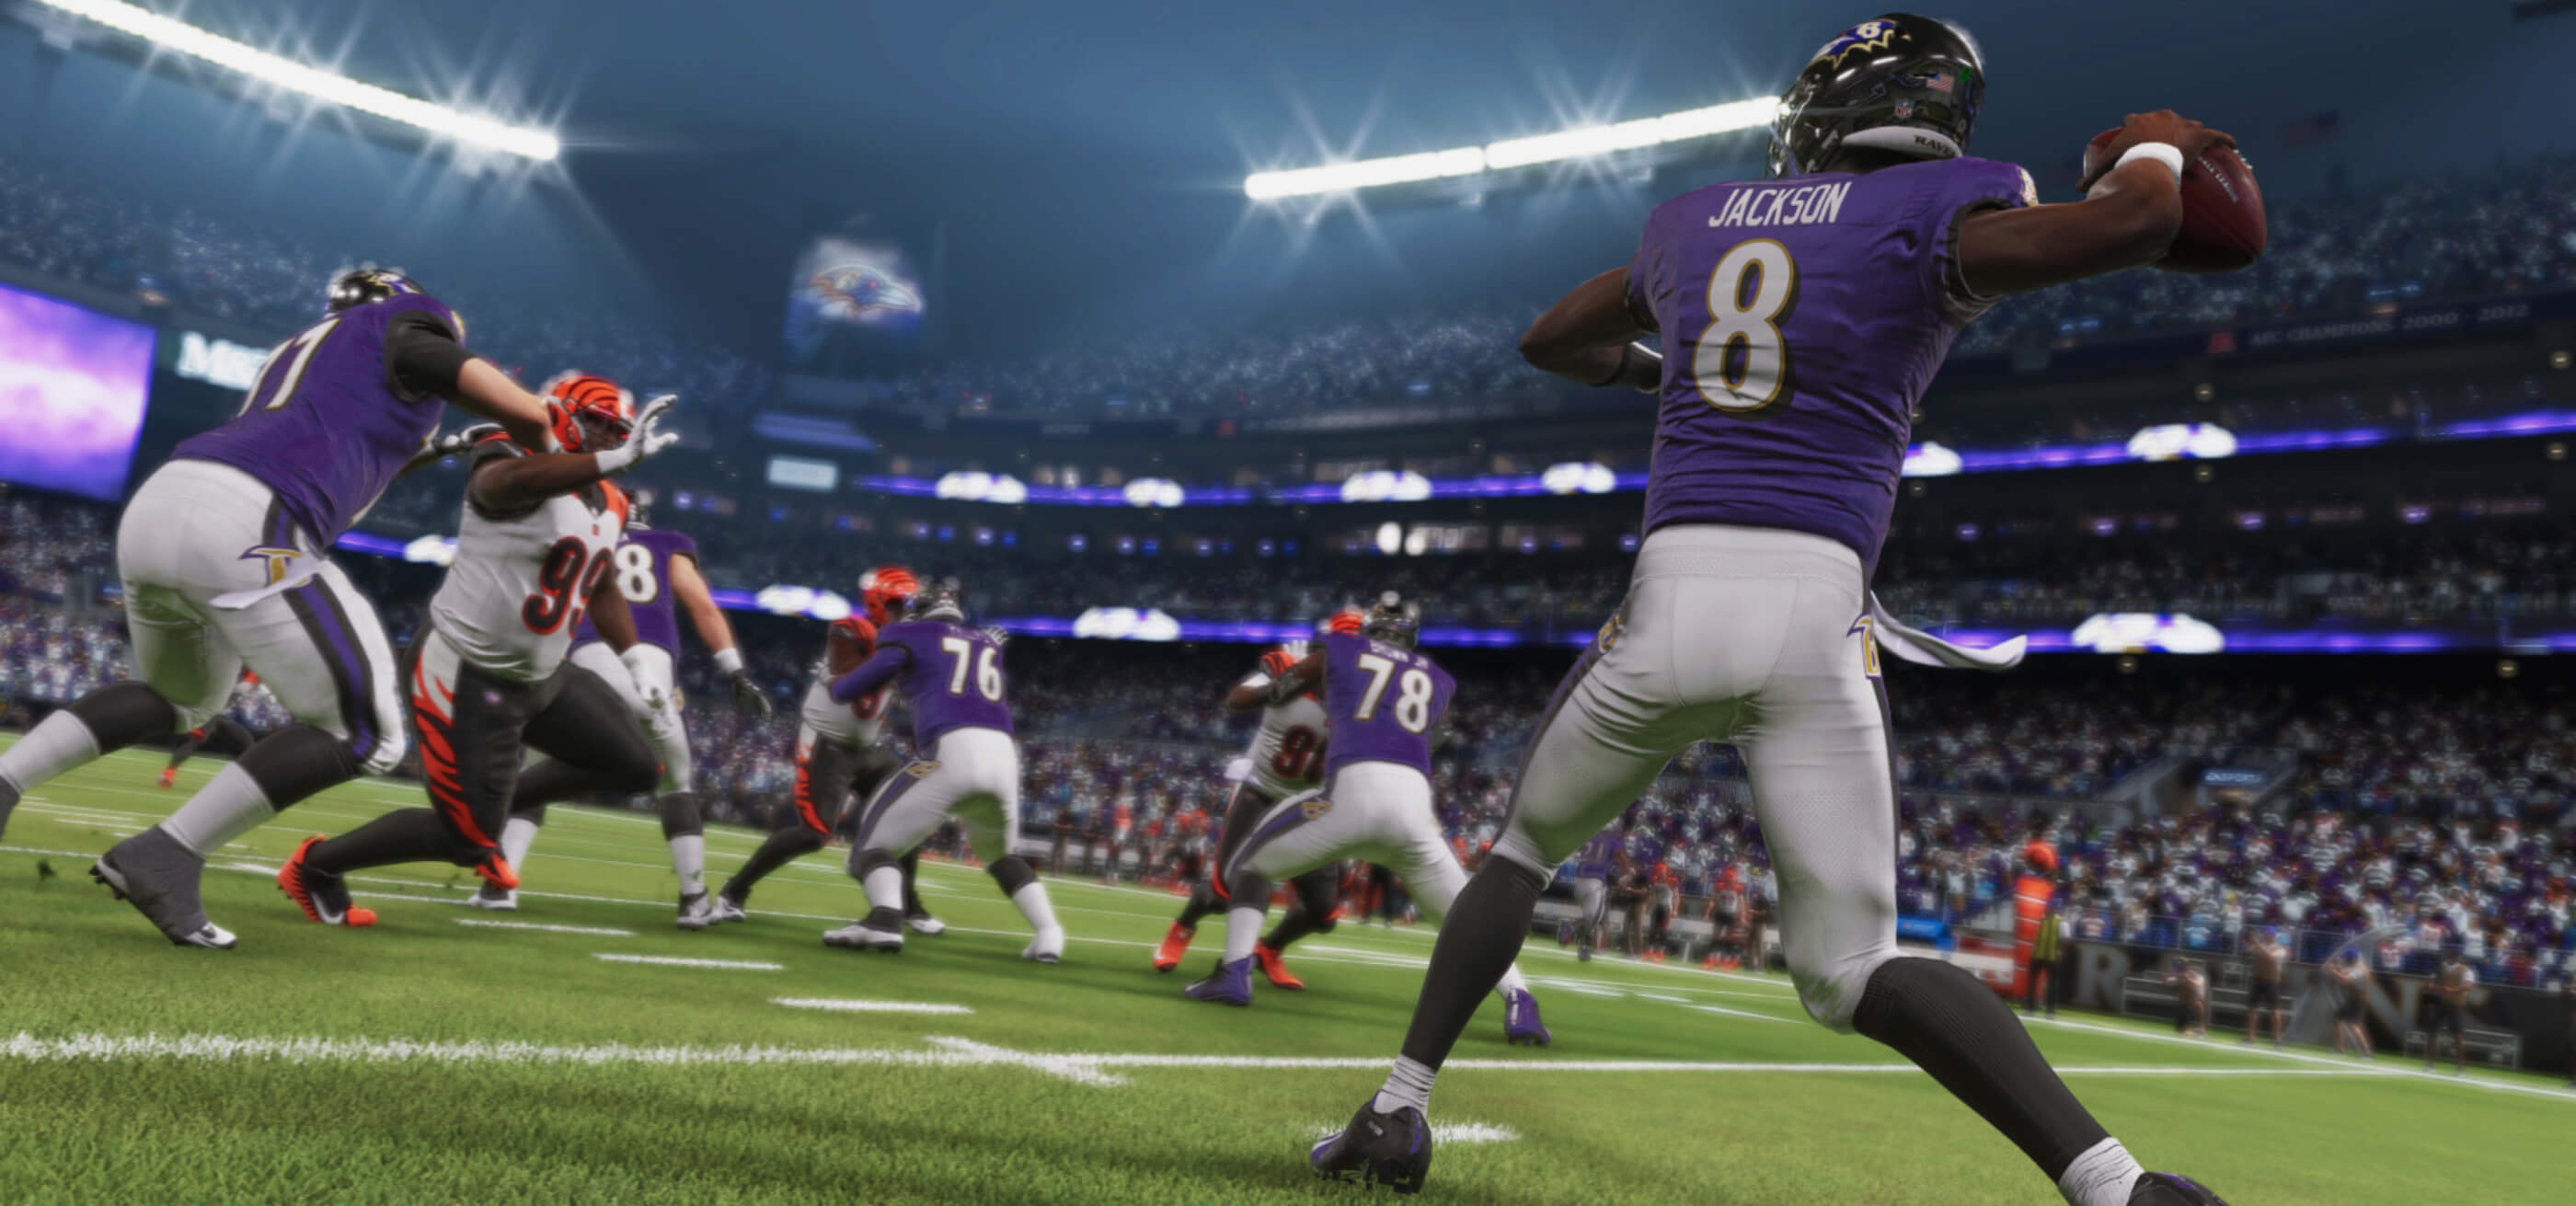 Madden NFL 21 screenshot: Quarterback Lamar Jackson readies for a pass.